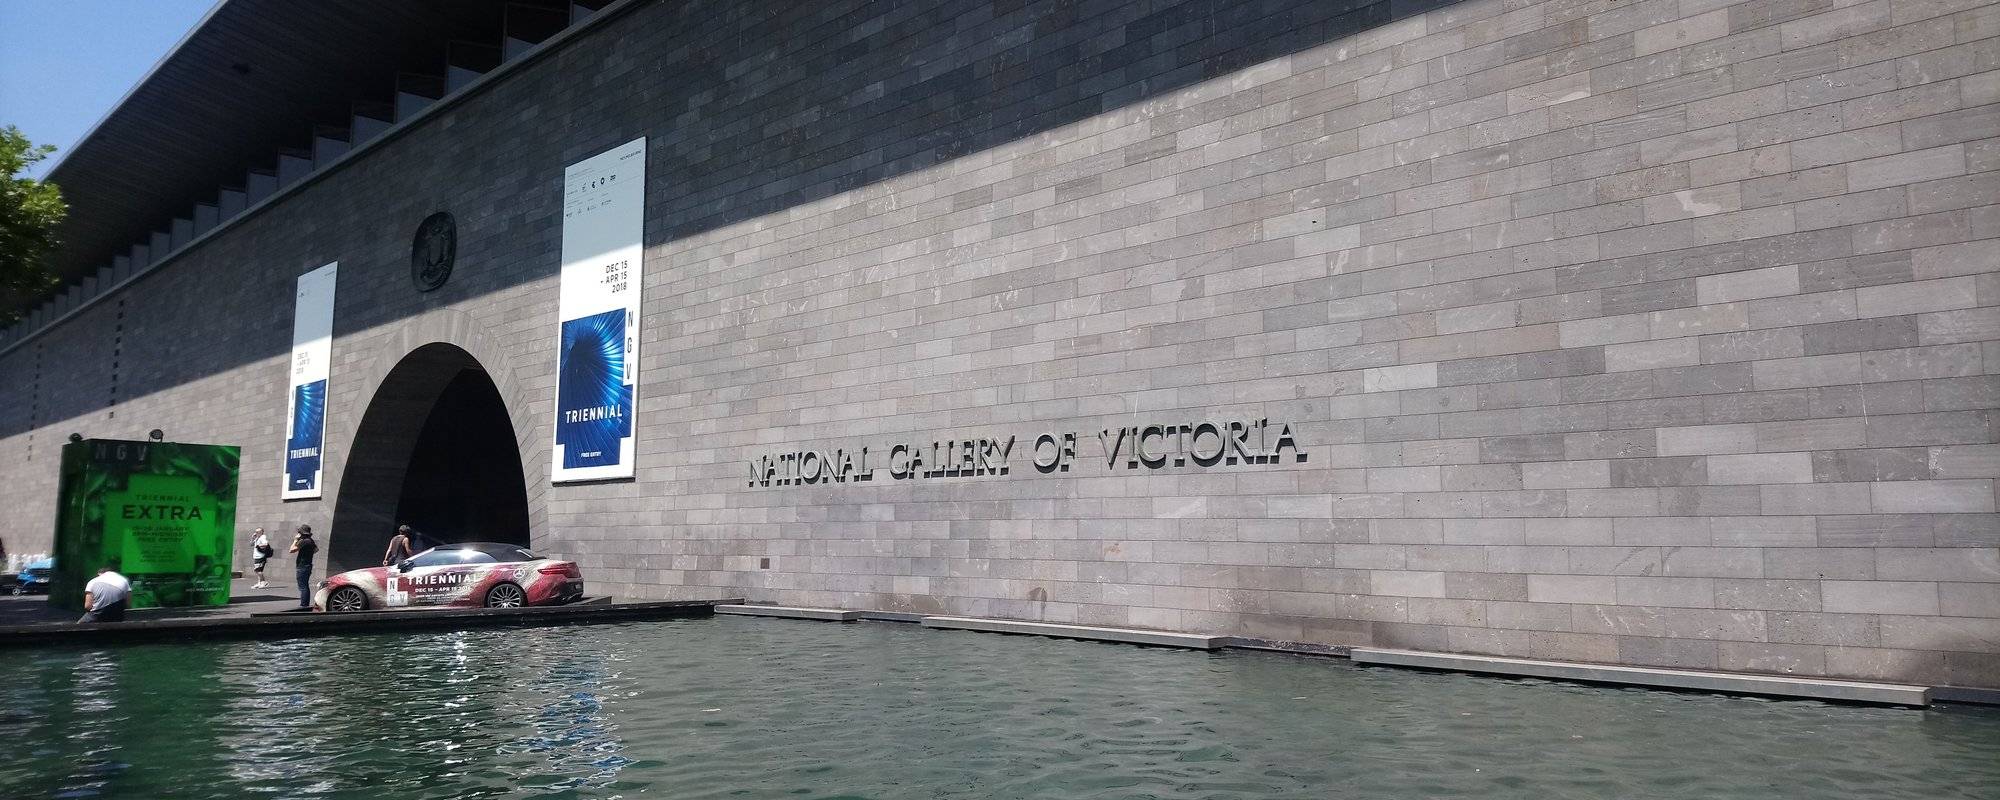 不鬥文藝鬥創意- Melbourne NGV藝術館的驚喜﹗Ideas rocks - National Gallery of Victoria, Melbourne